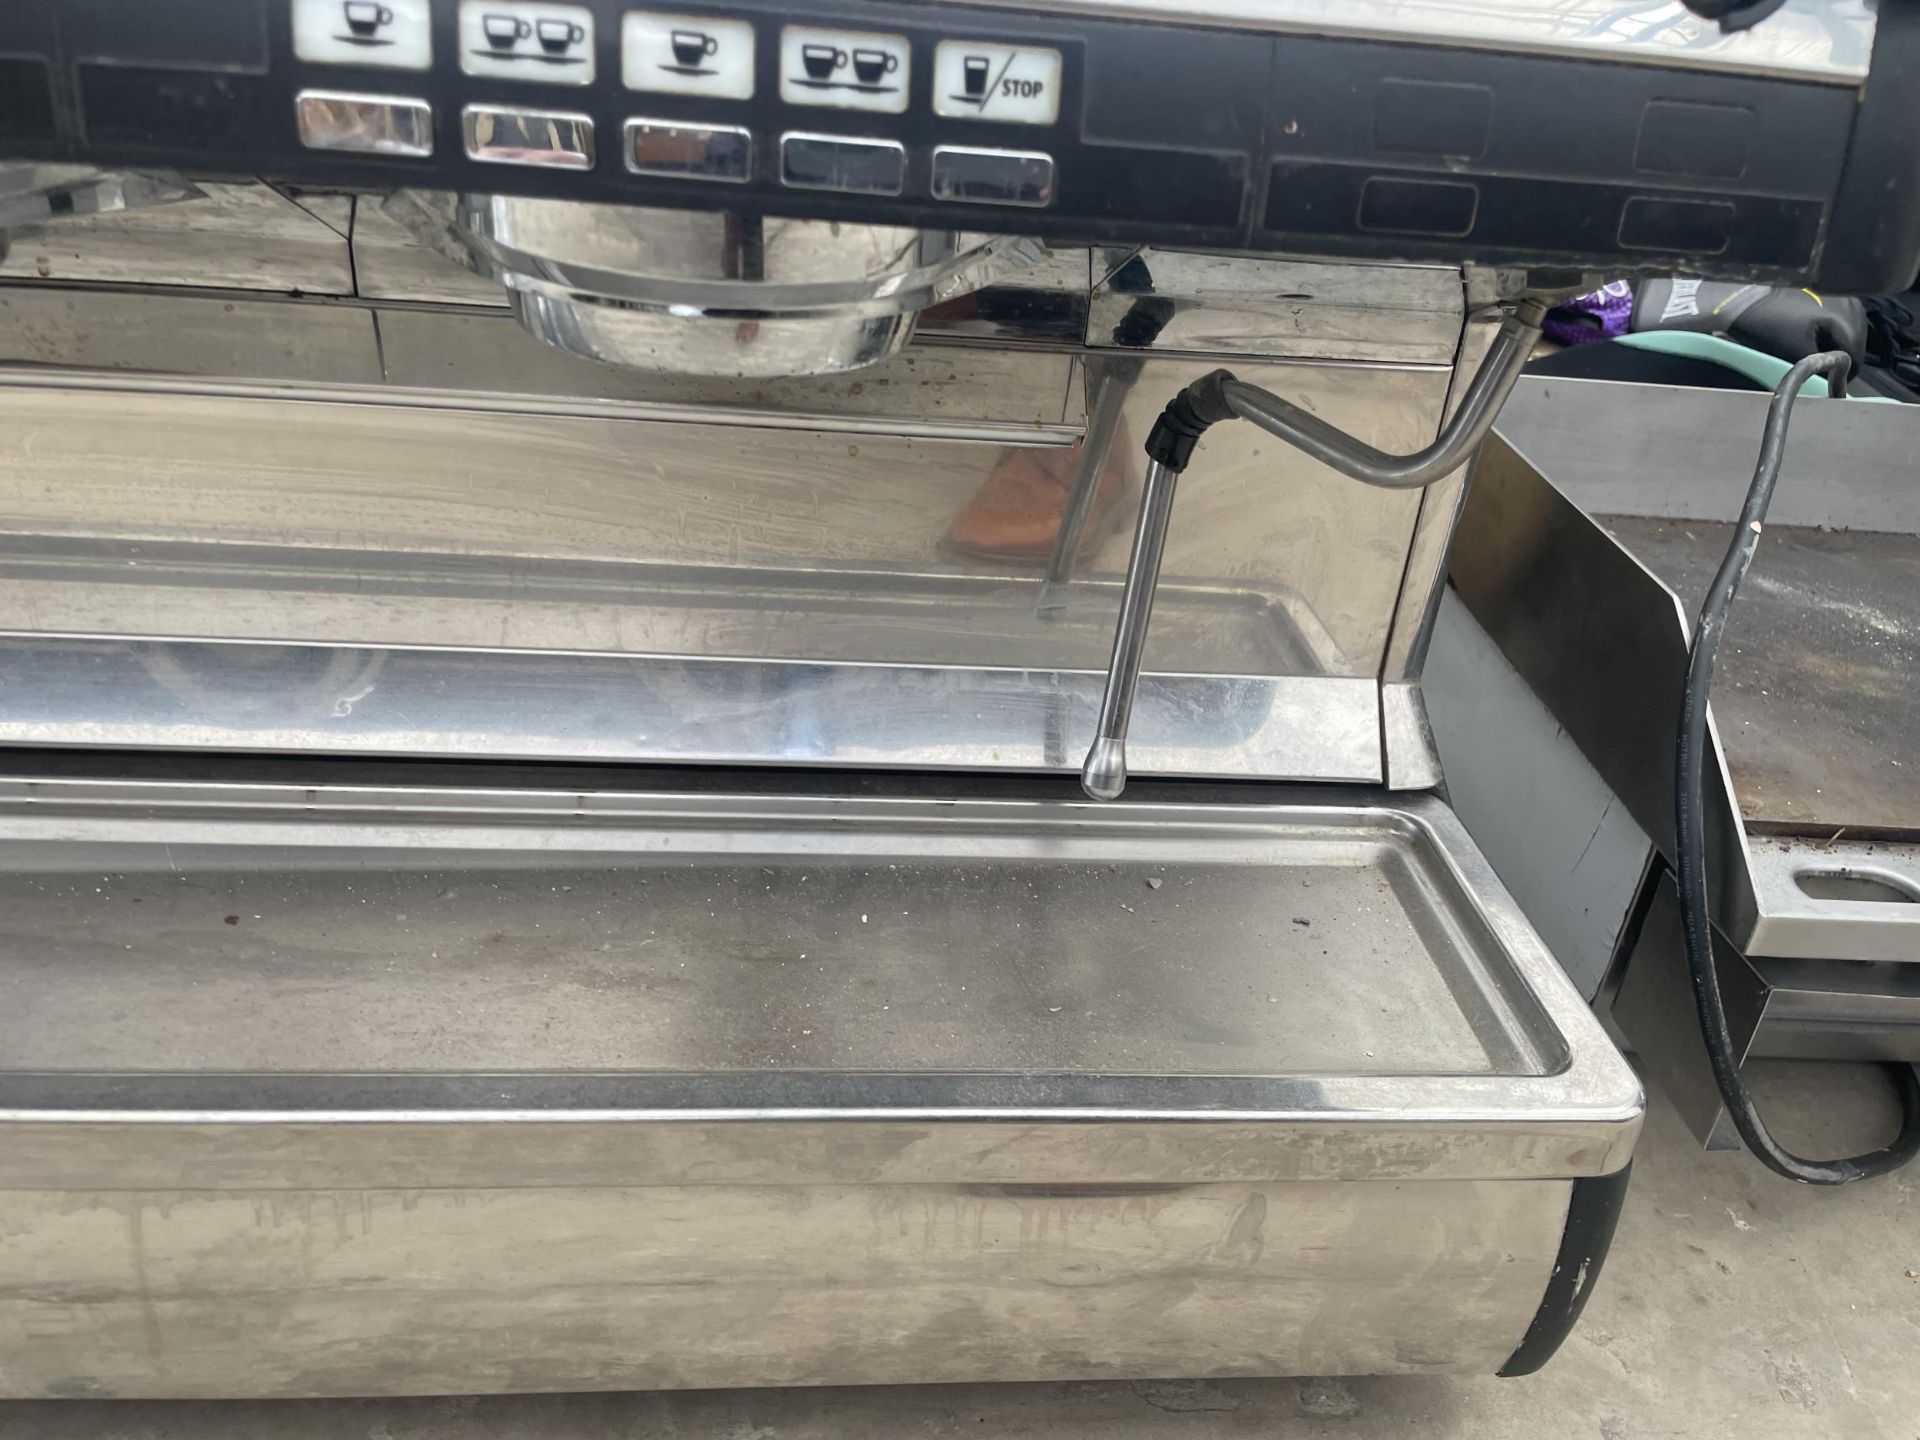 A LARGE AURELIA COFFEE MACHINE - Image 5 of 5